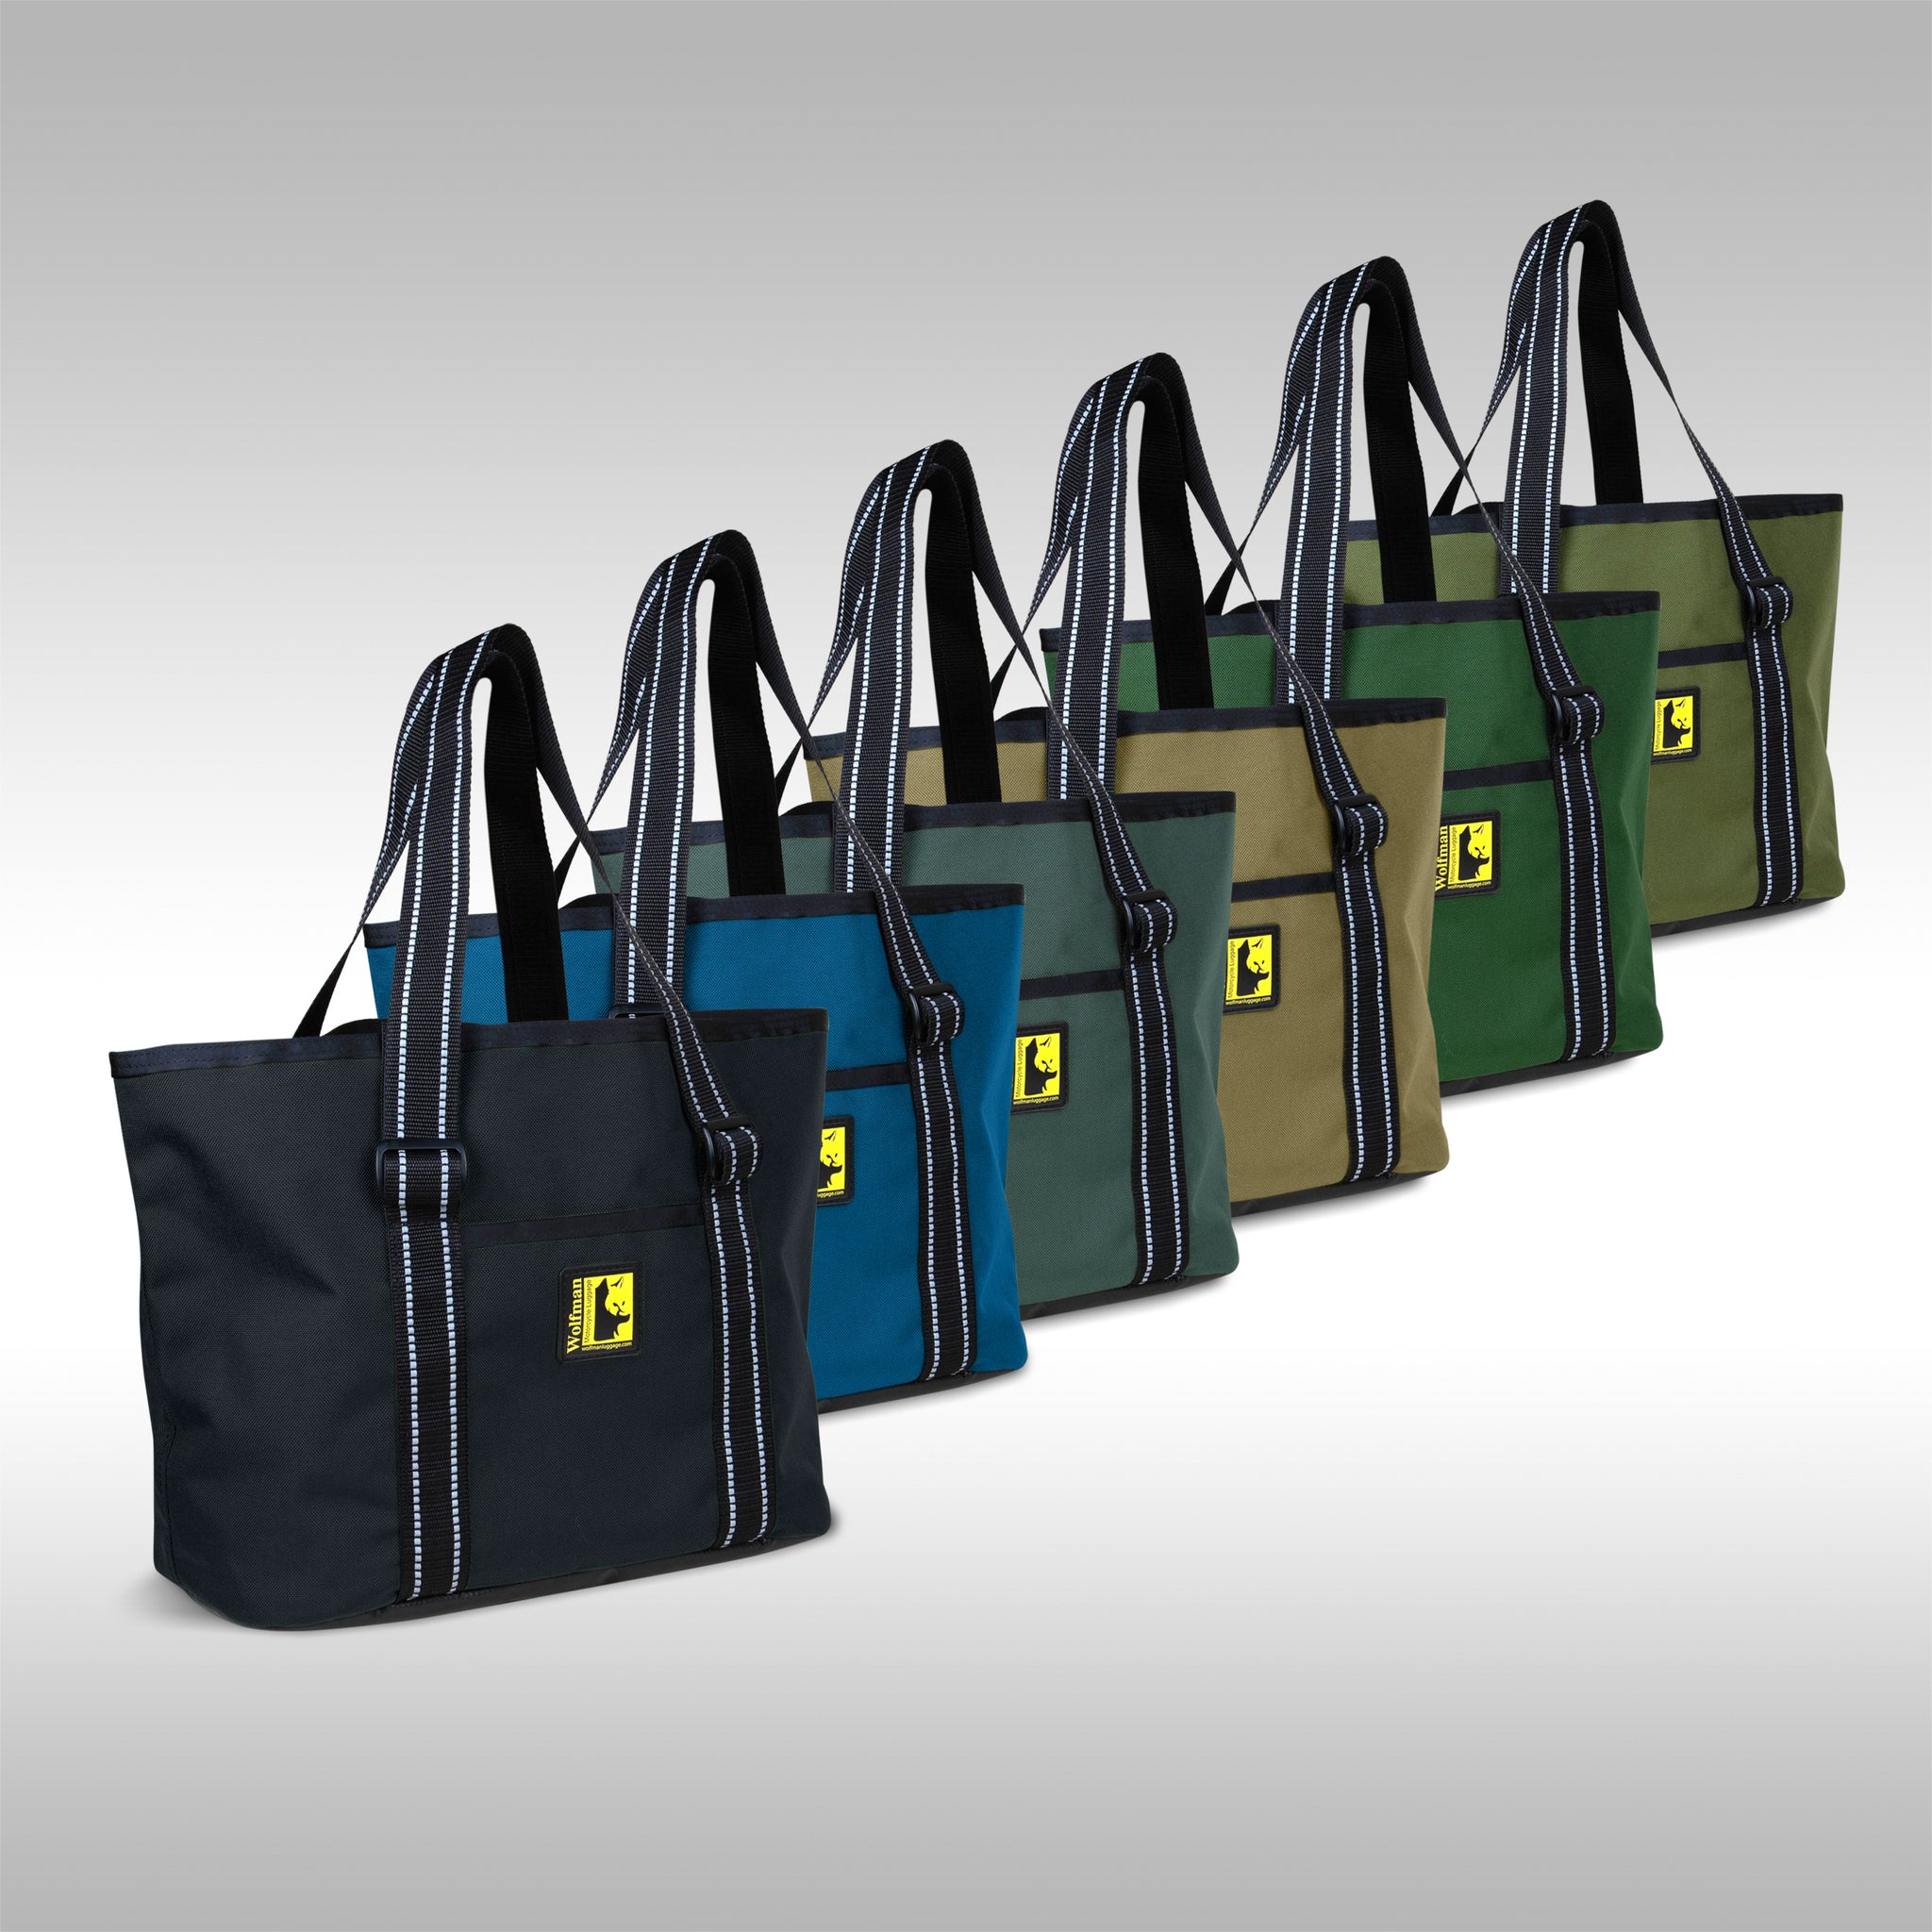 Custom Logo: Canvas Beach Tote Bags (Full Color Print)